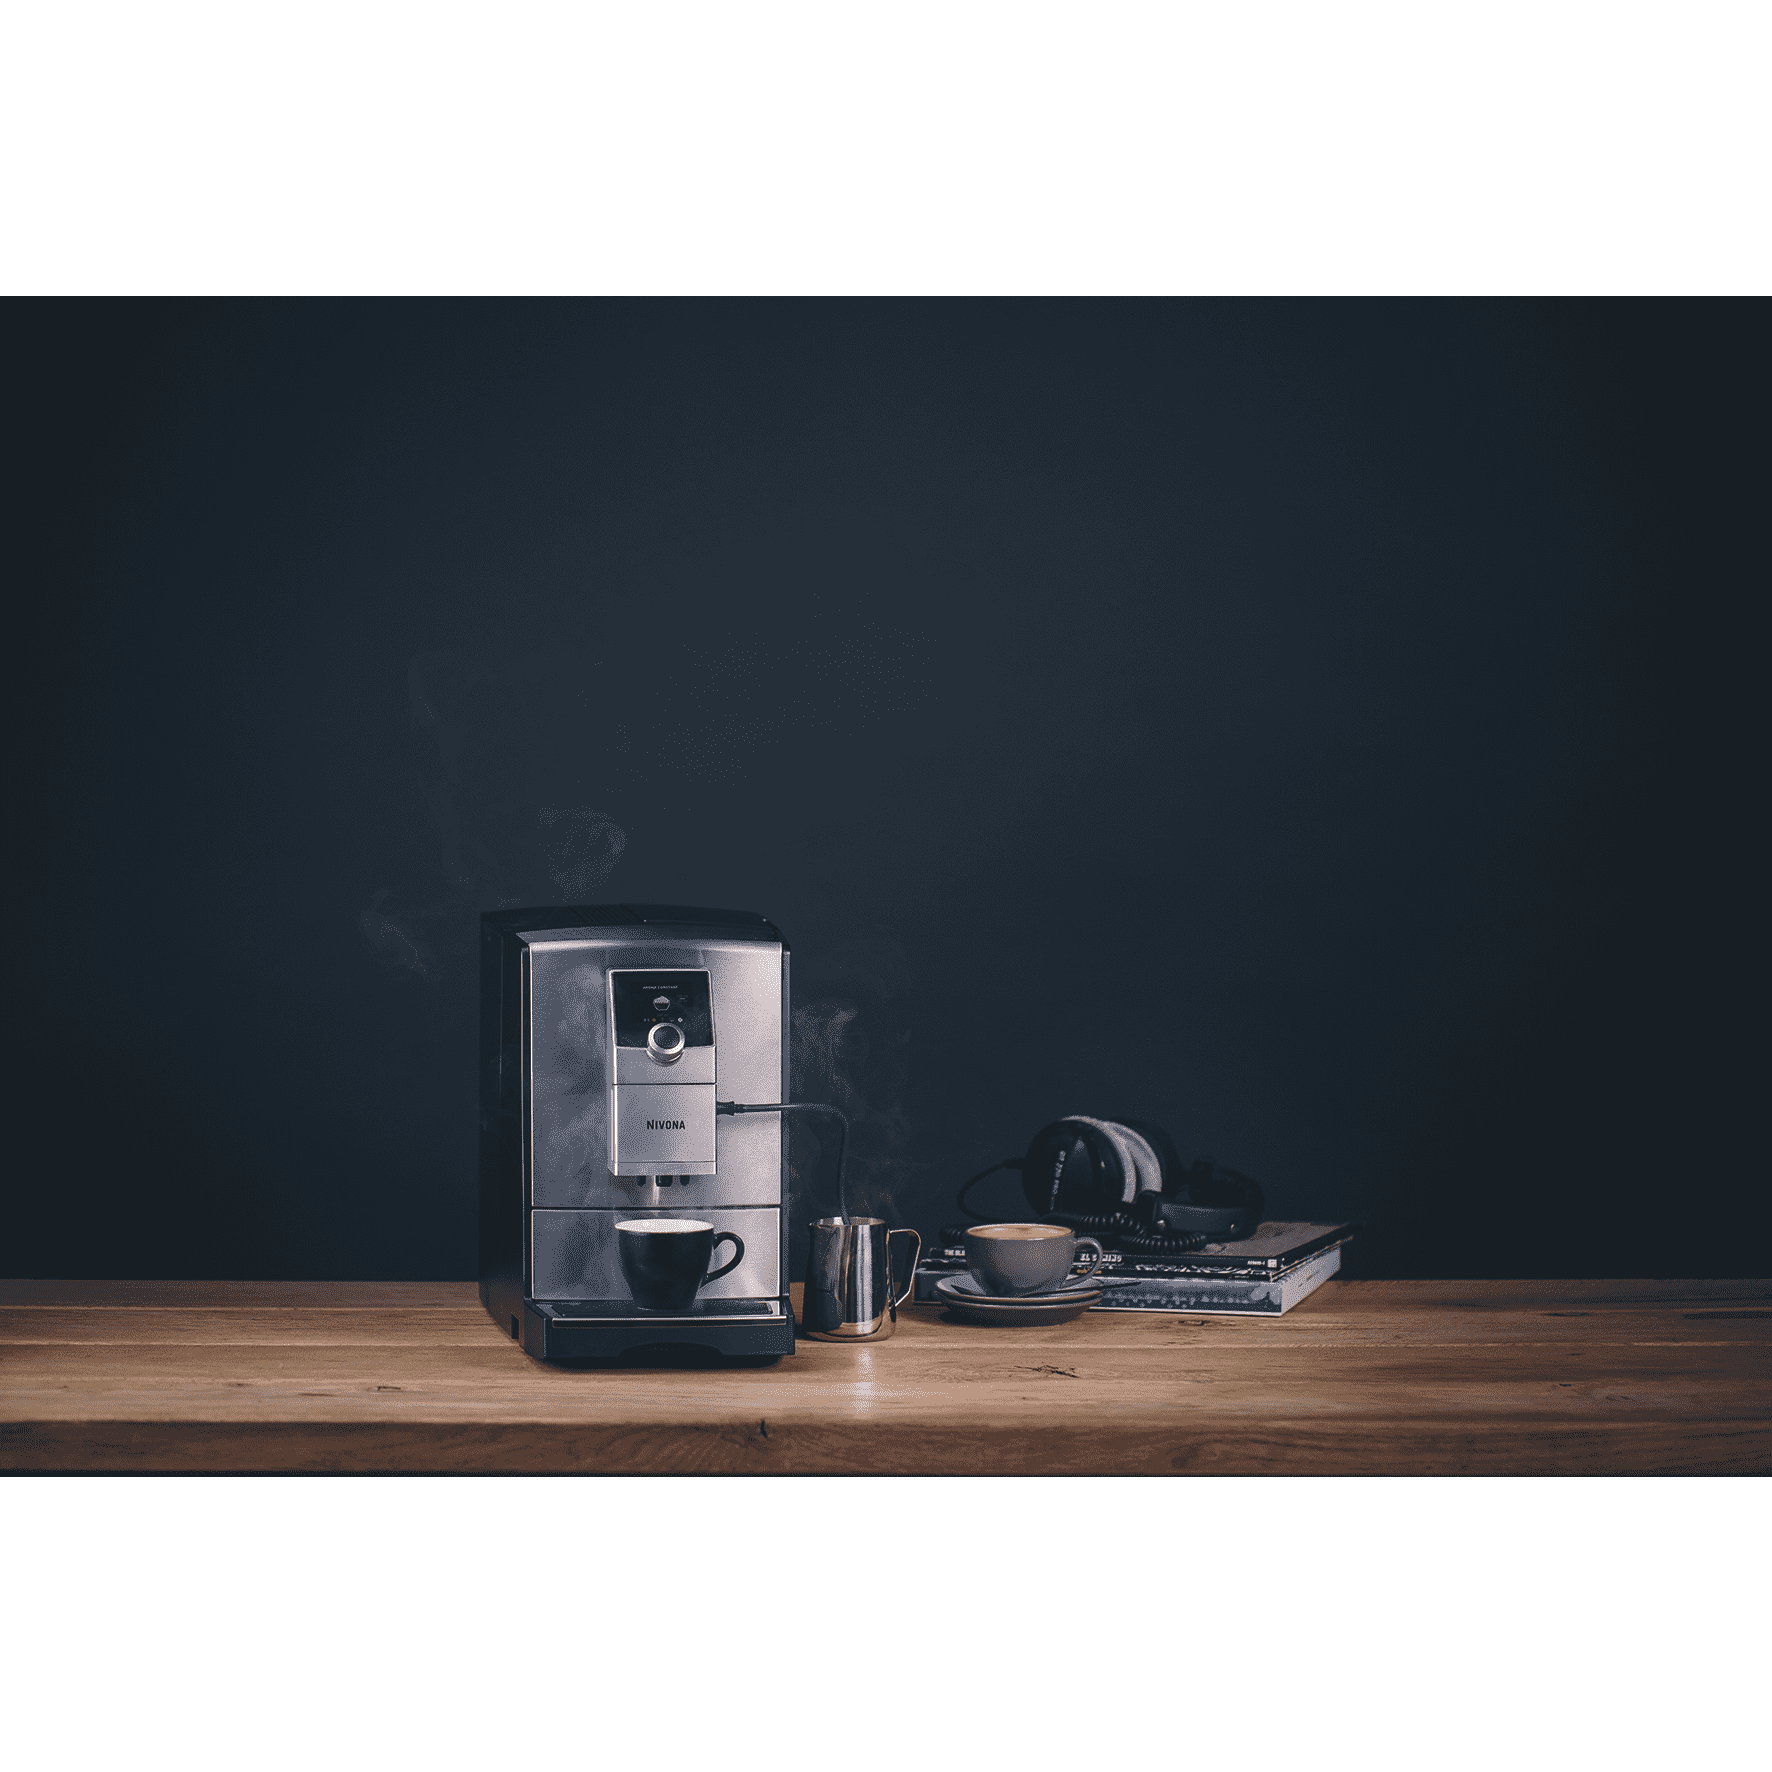 Nivona 799 - Edelstahl - Chrom NICR 7'99 - 5 Jahre Garantie  Nivona    - Rheinland.Coffee